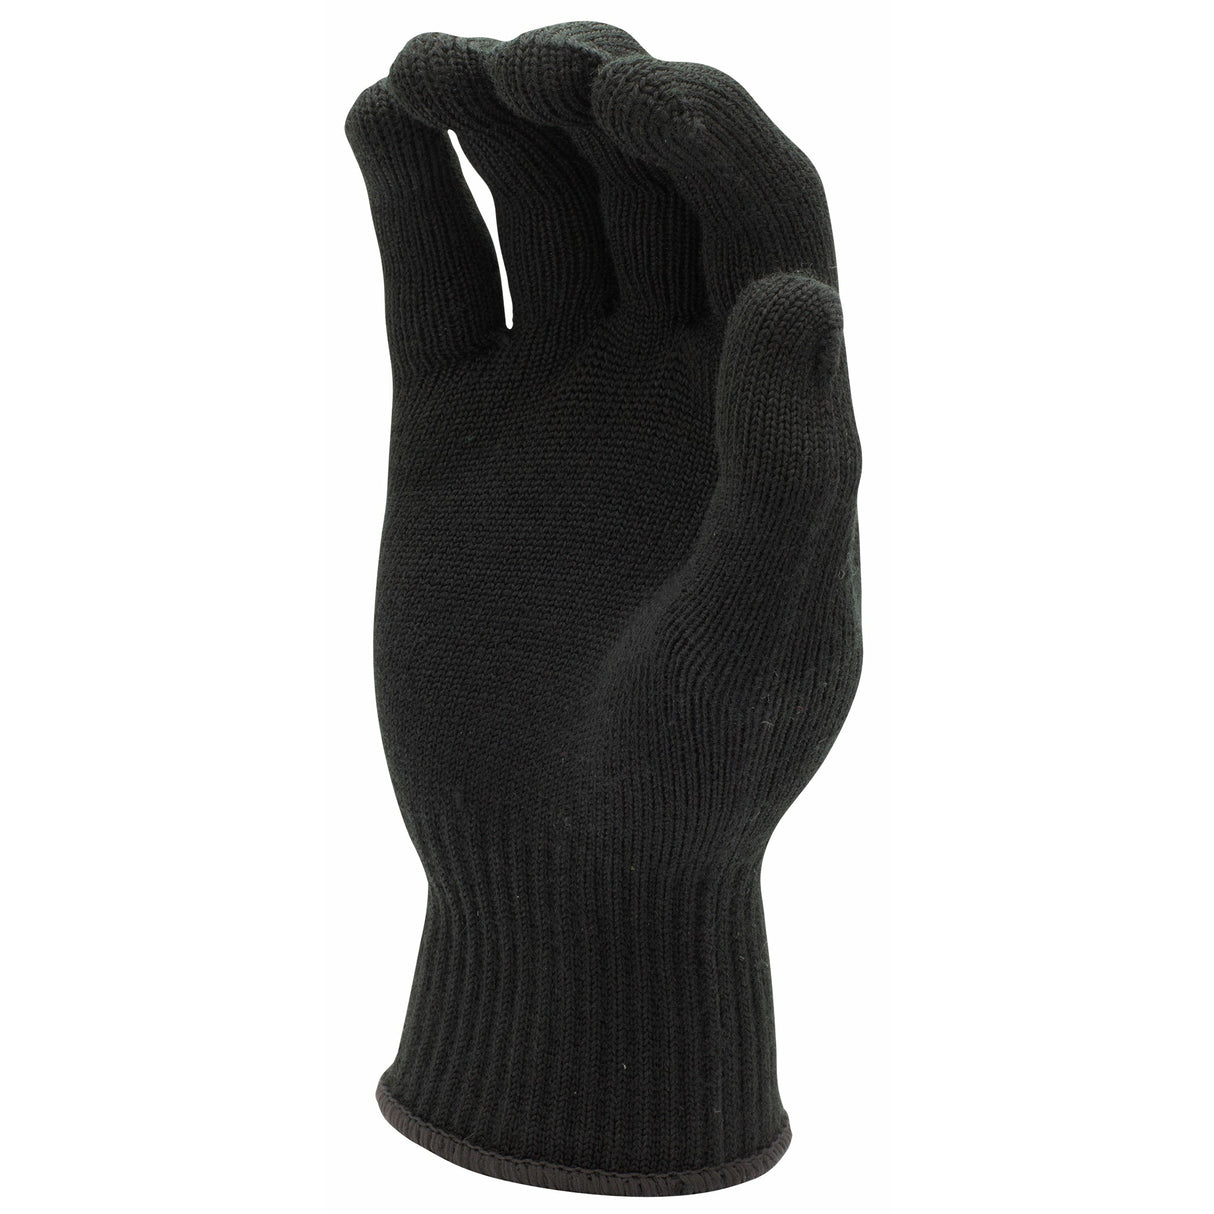 SealSkinz Solo Merino Liner glove liners